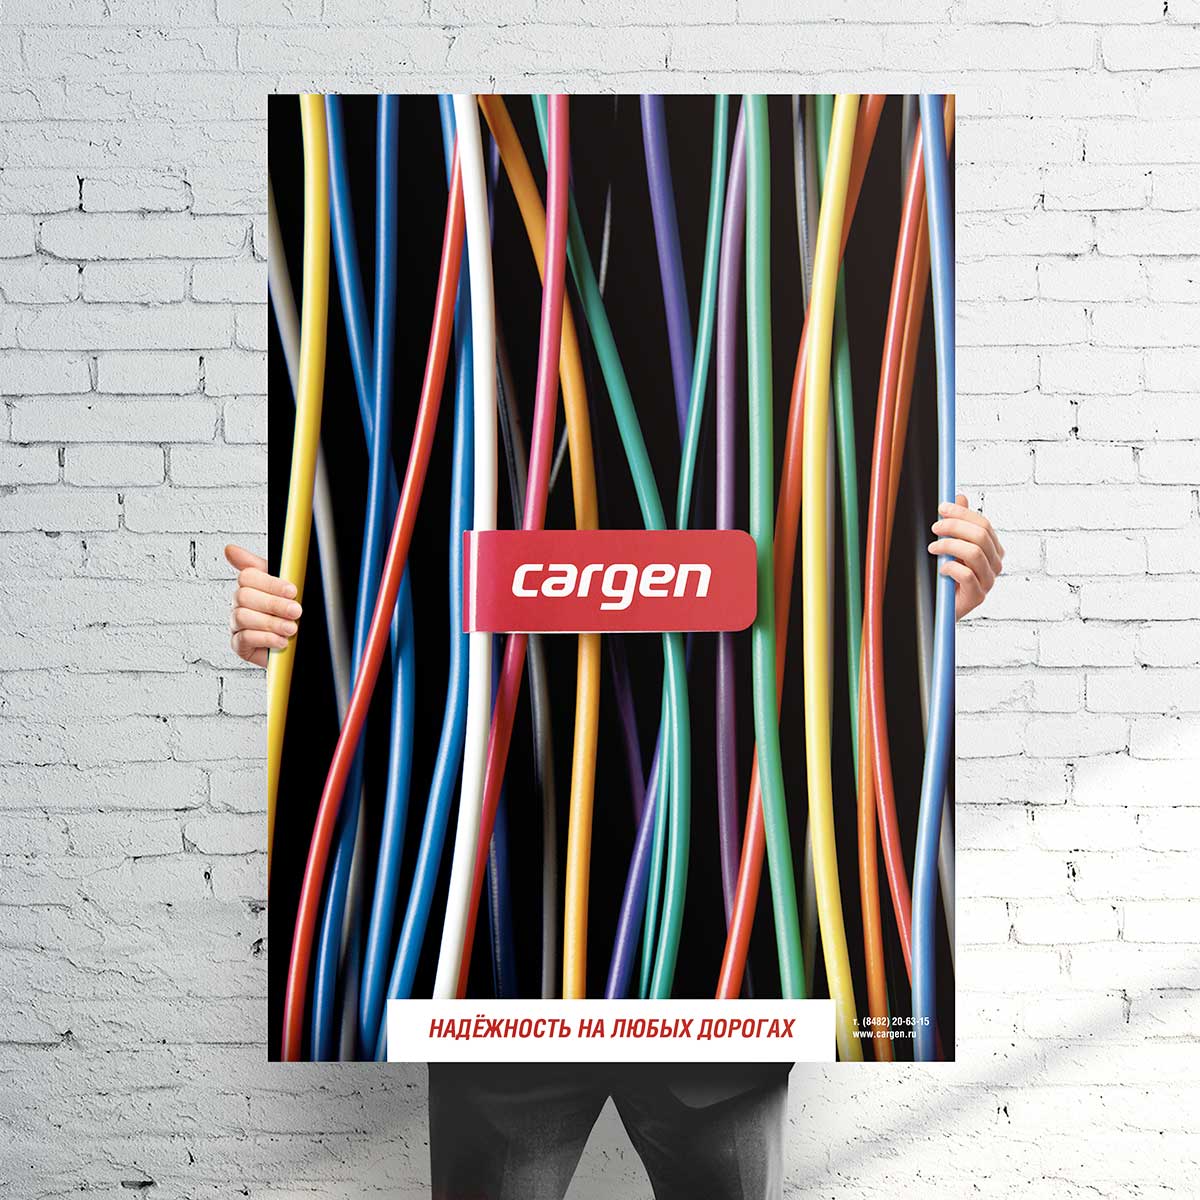 Cargen-poster1.jpg